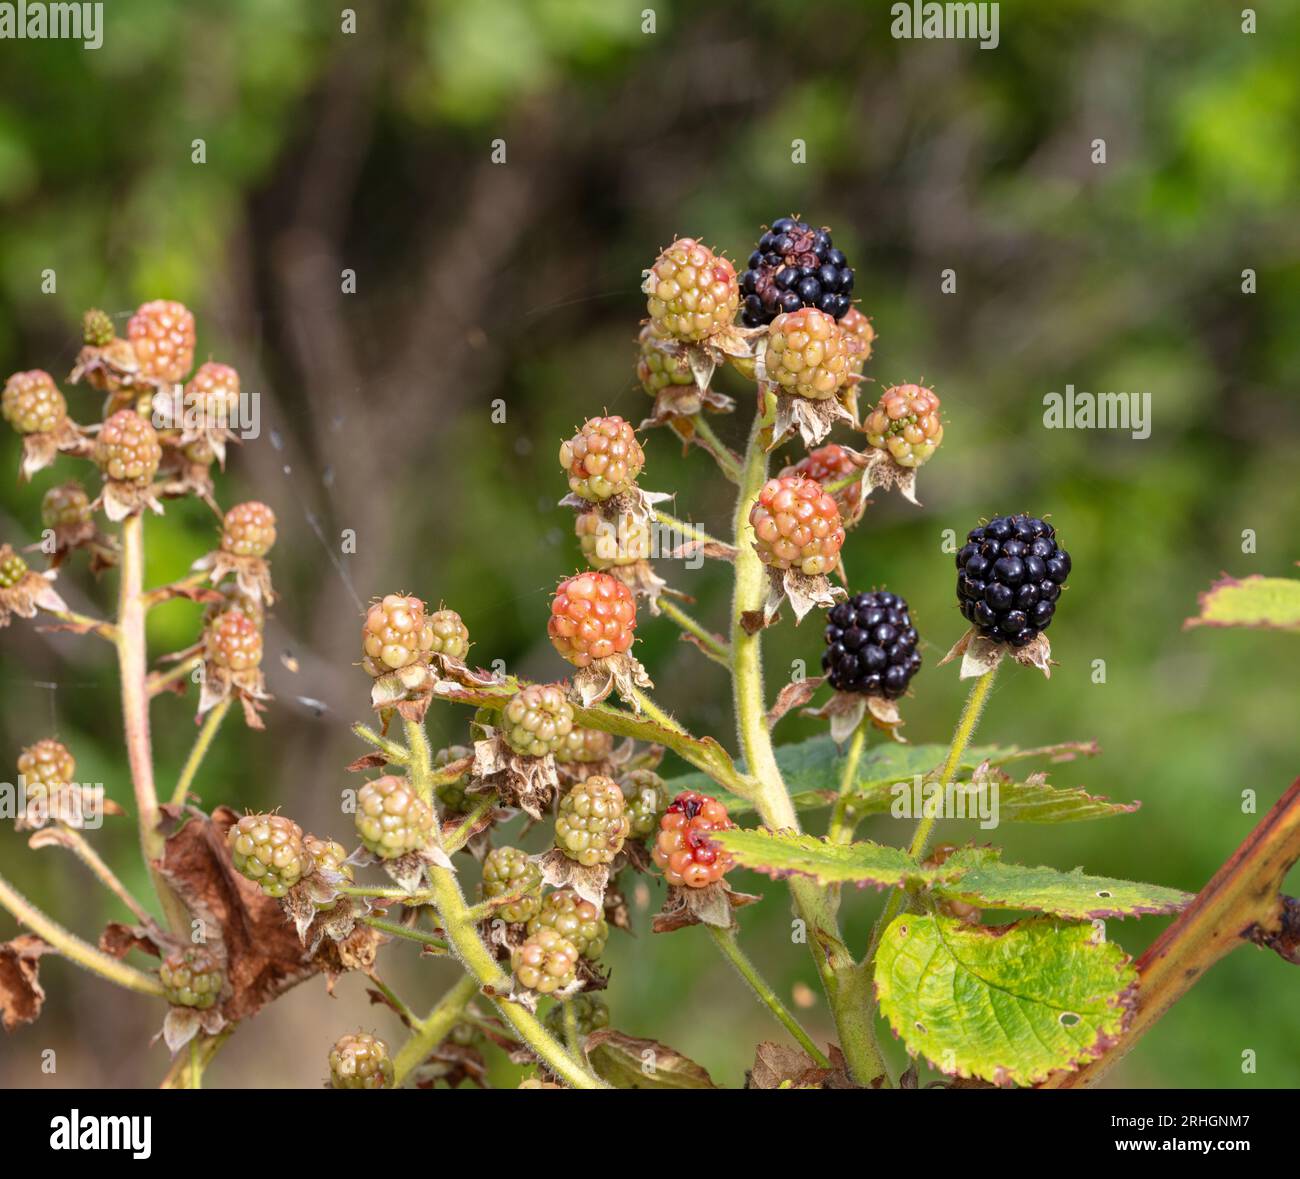 'Thornfree' Blackberry, Björnbär (Rubus fruticosus) Stock Photo